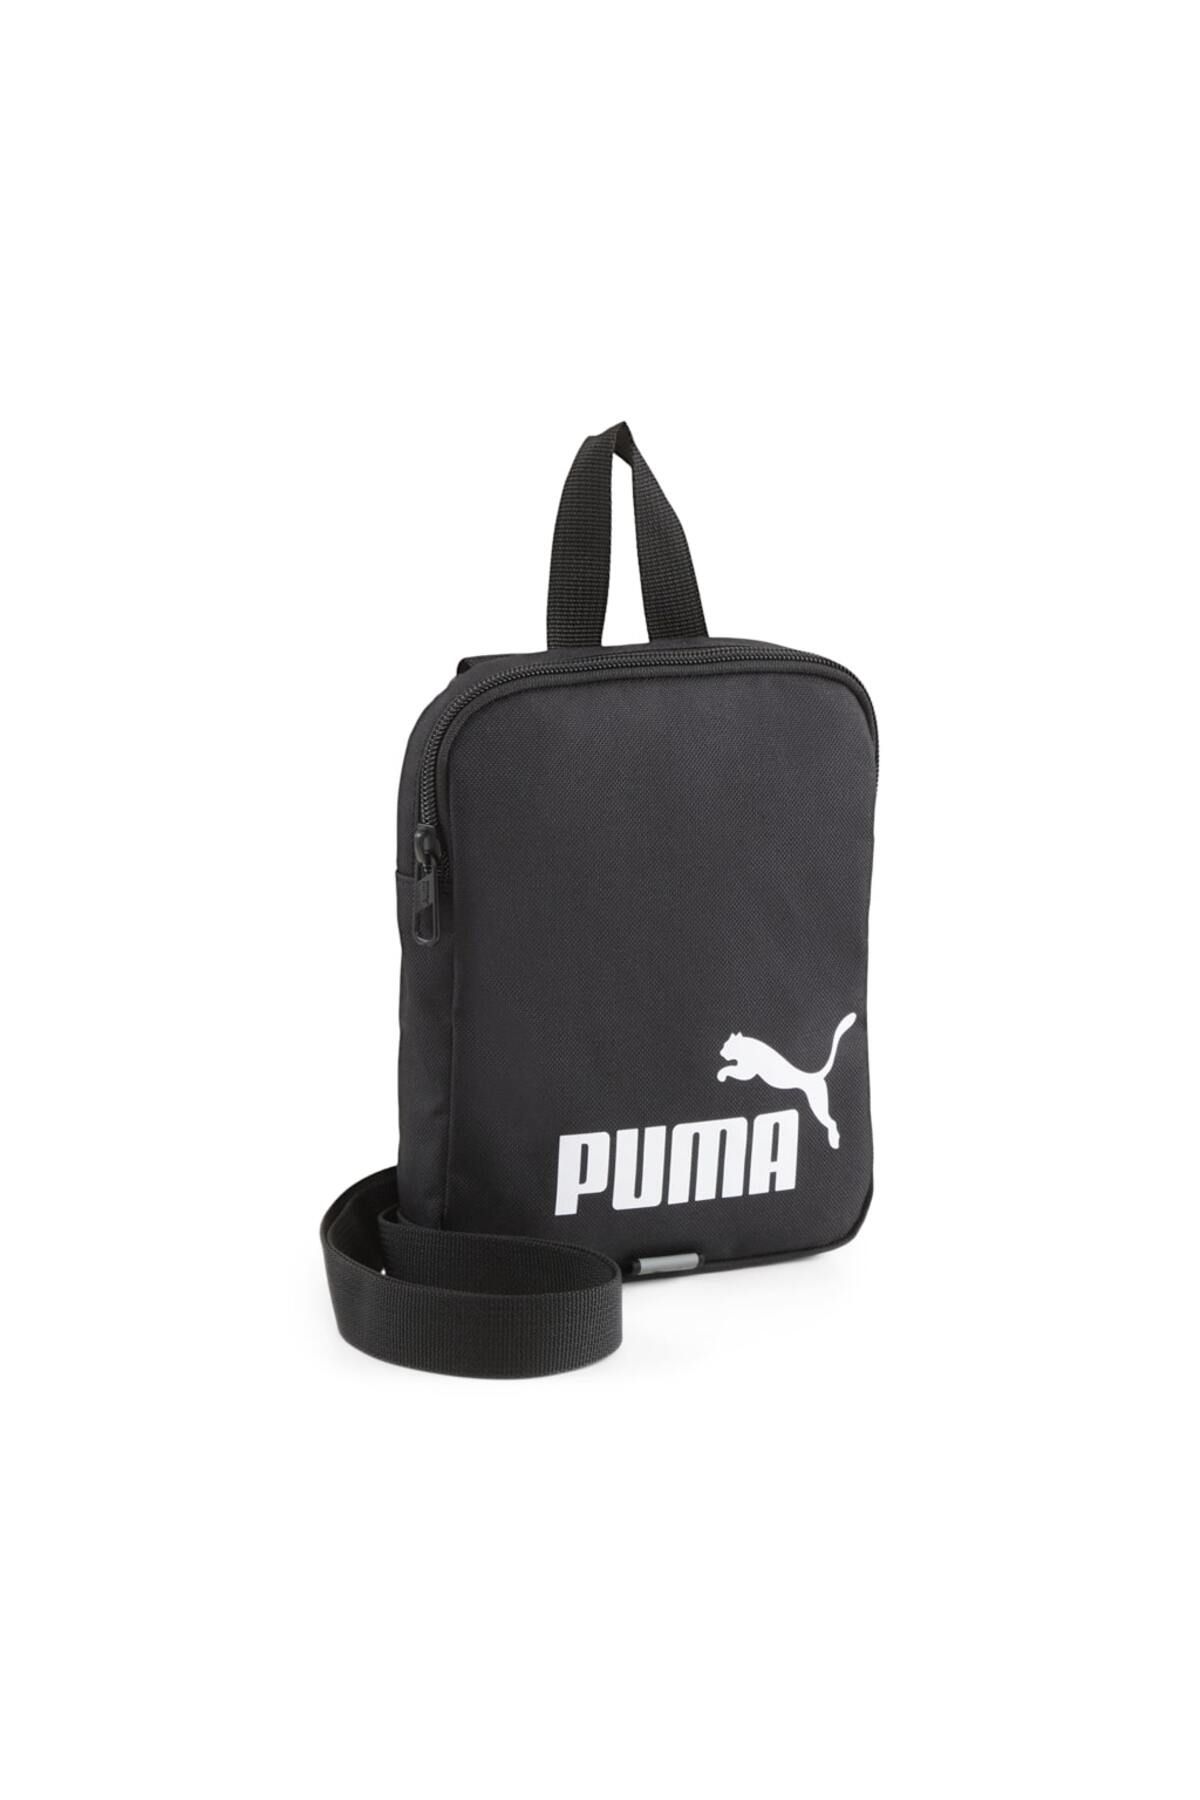 Puma Phase Portable07995501